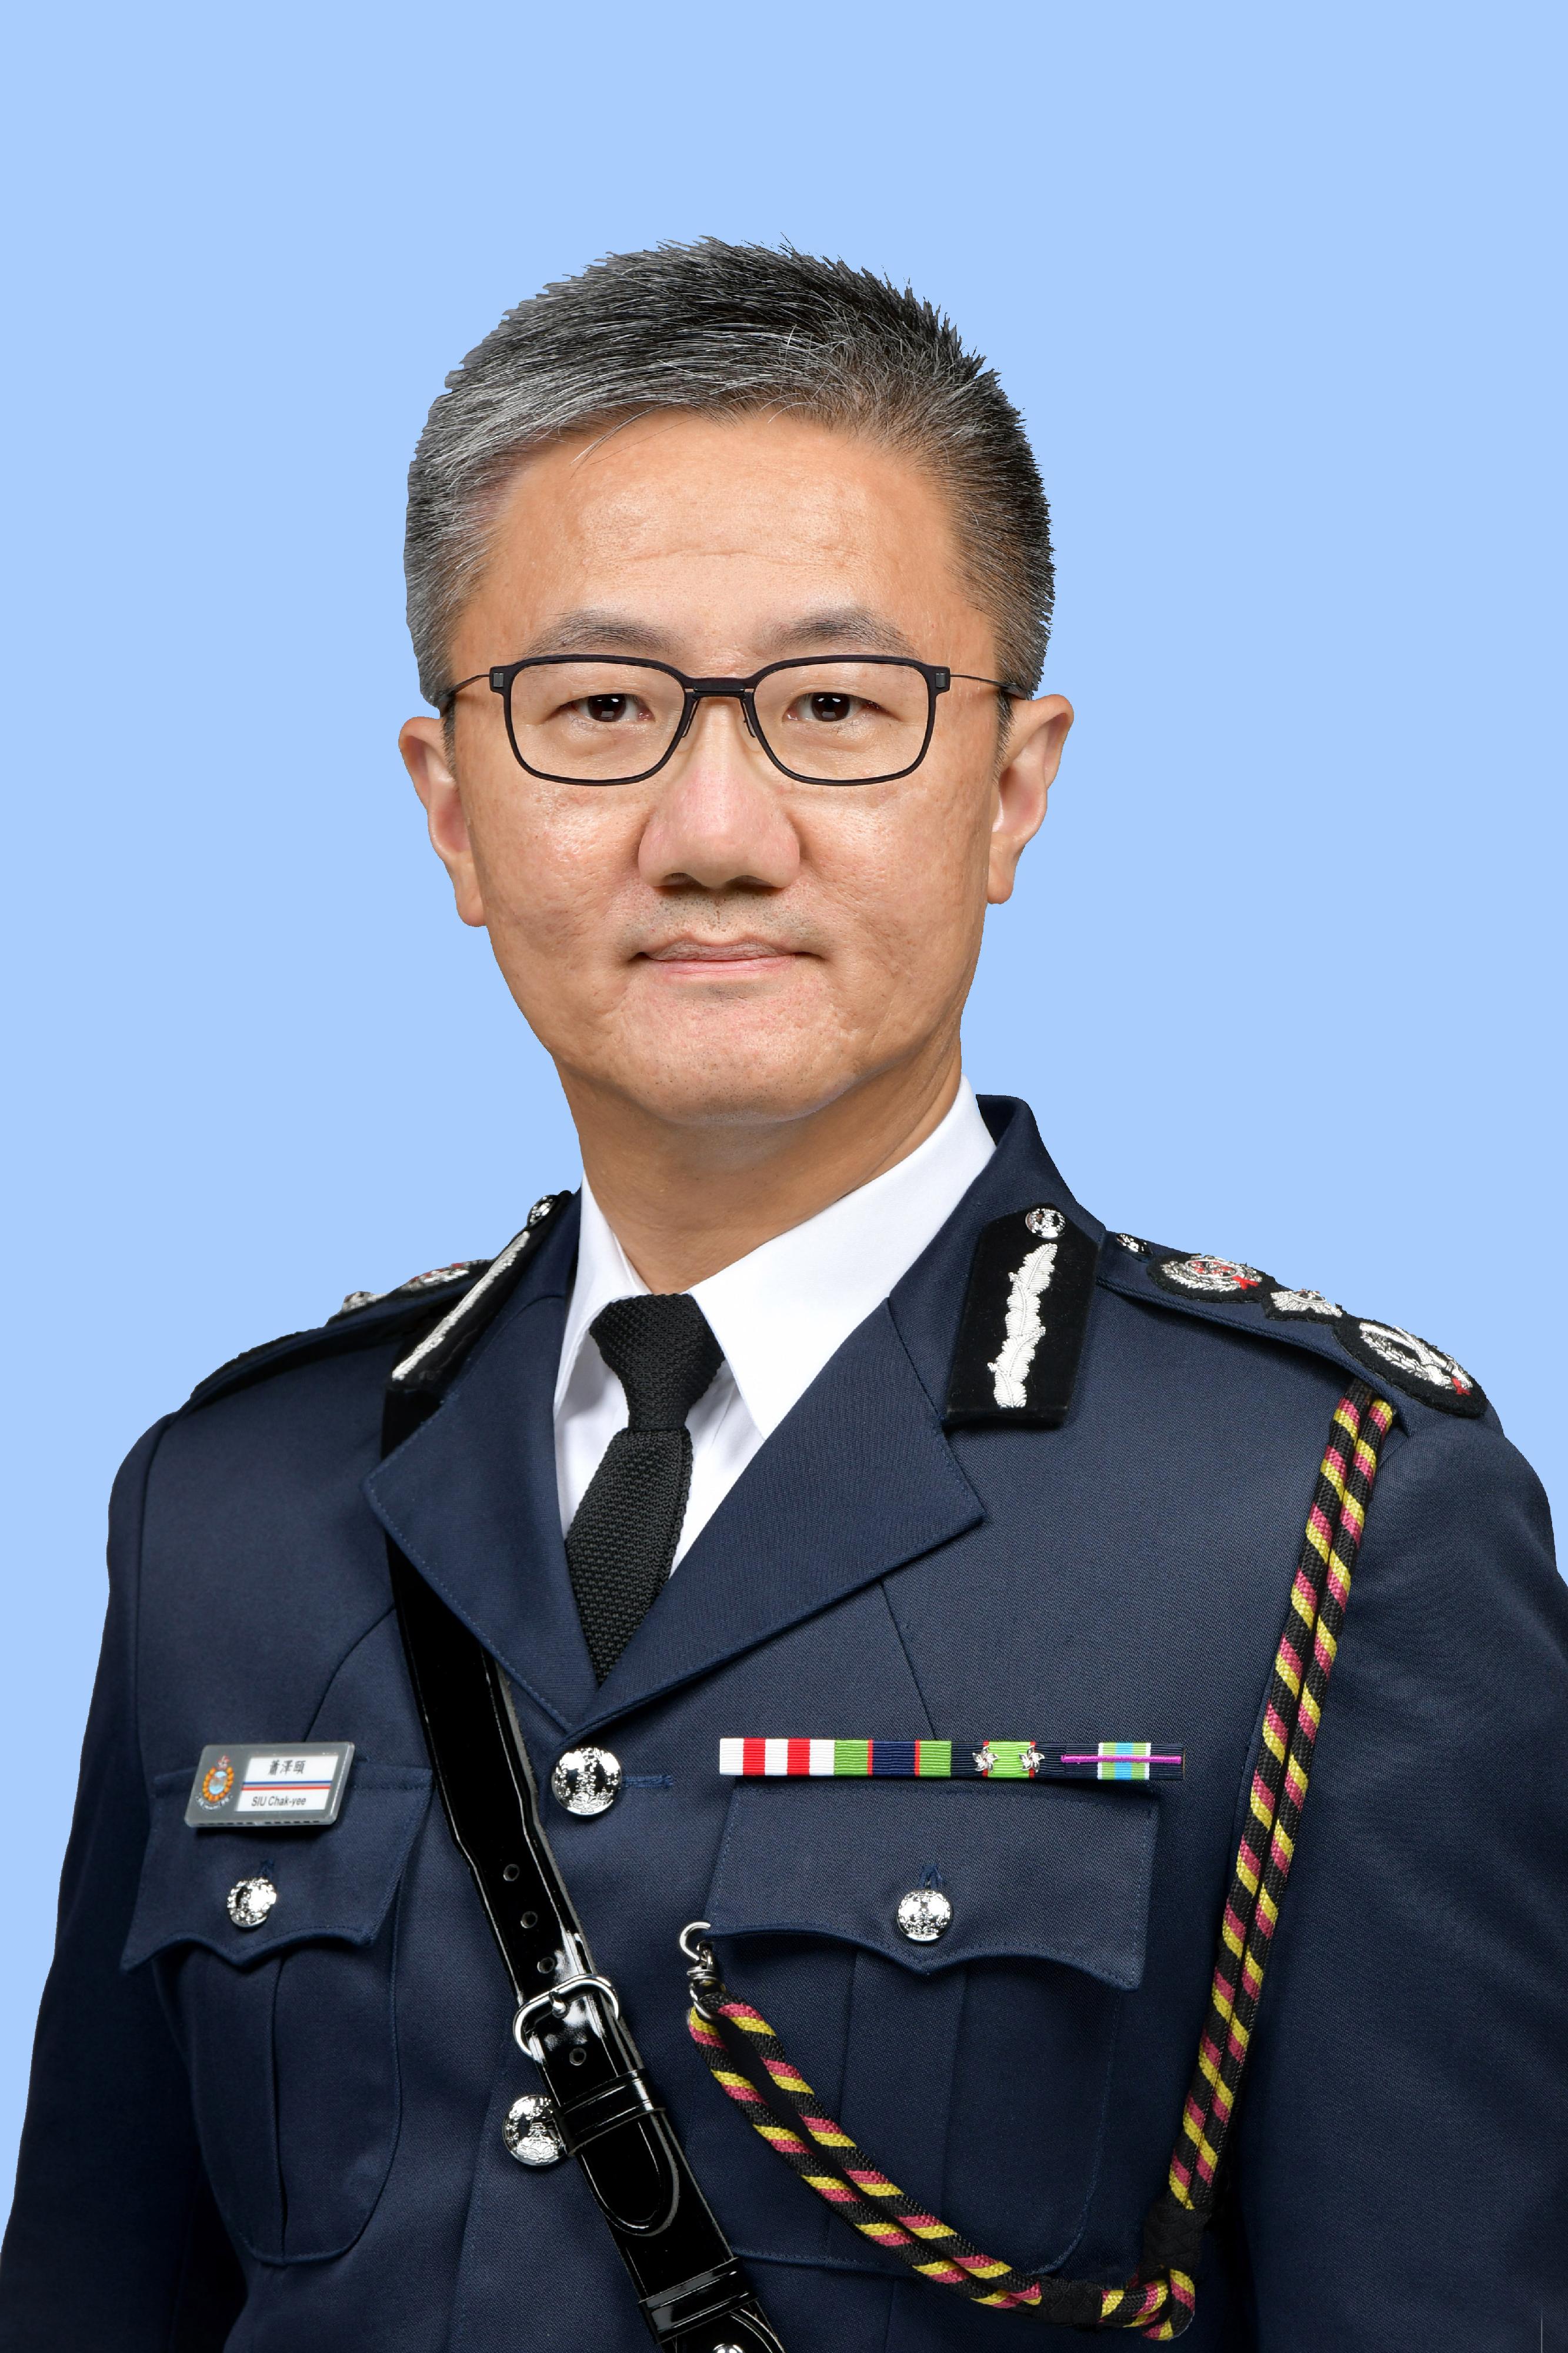 The Commissioner of Police (designate), Mr Siu Chak-yee.